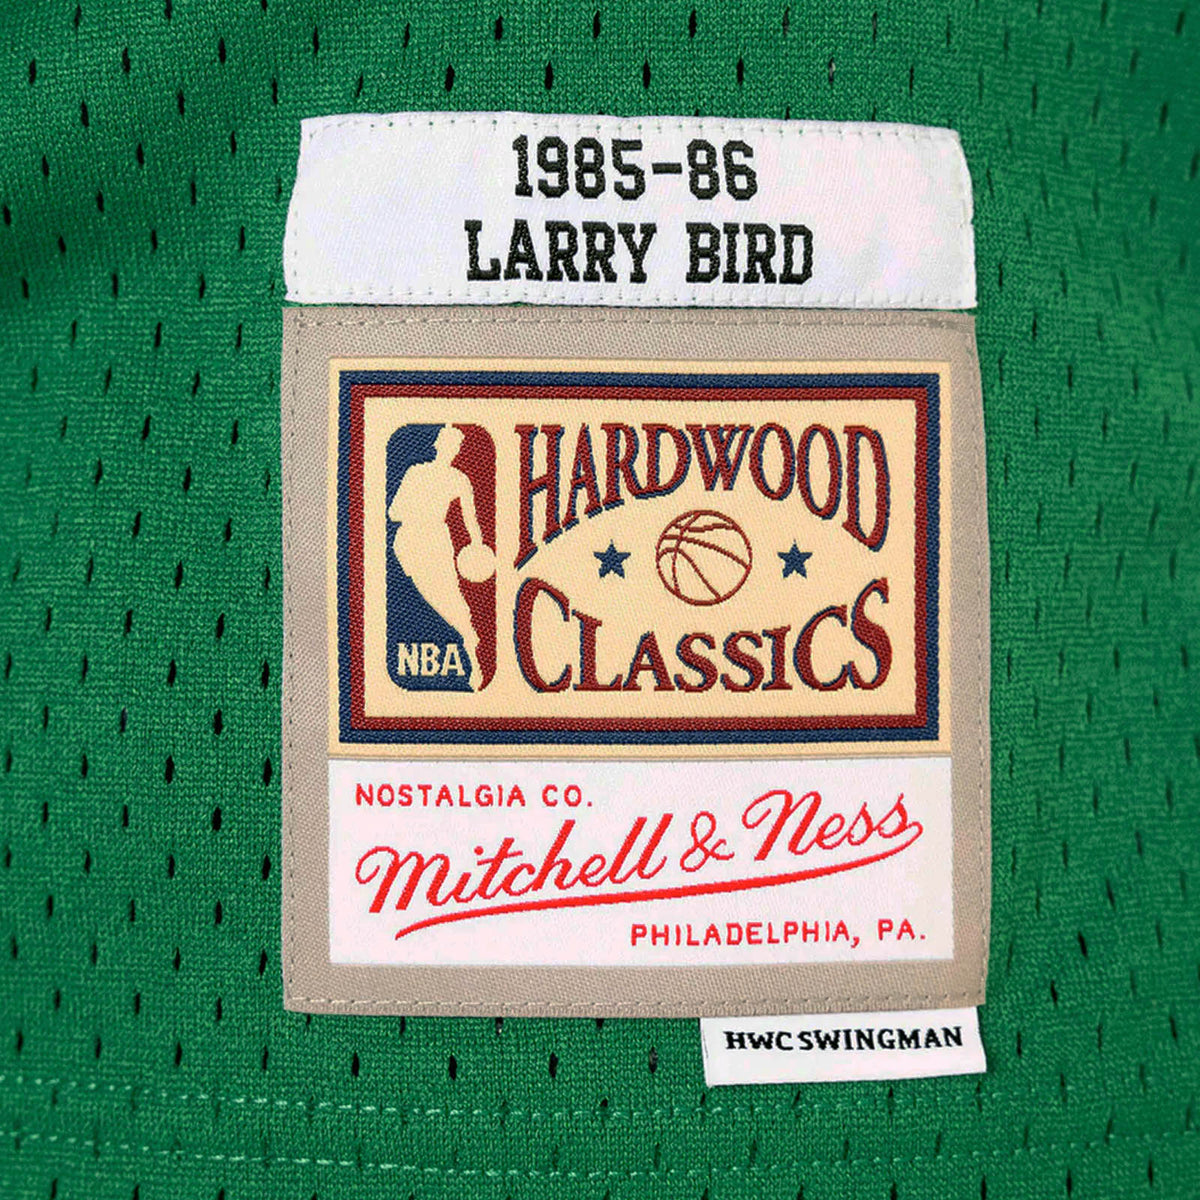 Mitchell & Ness Swingman Boston Celtics Road 1985-86 Larry Bird Jersey, Green